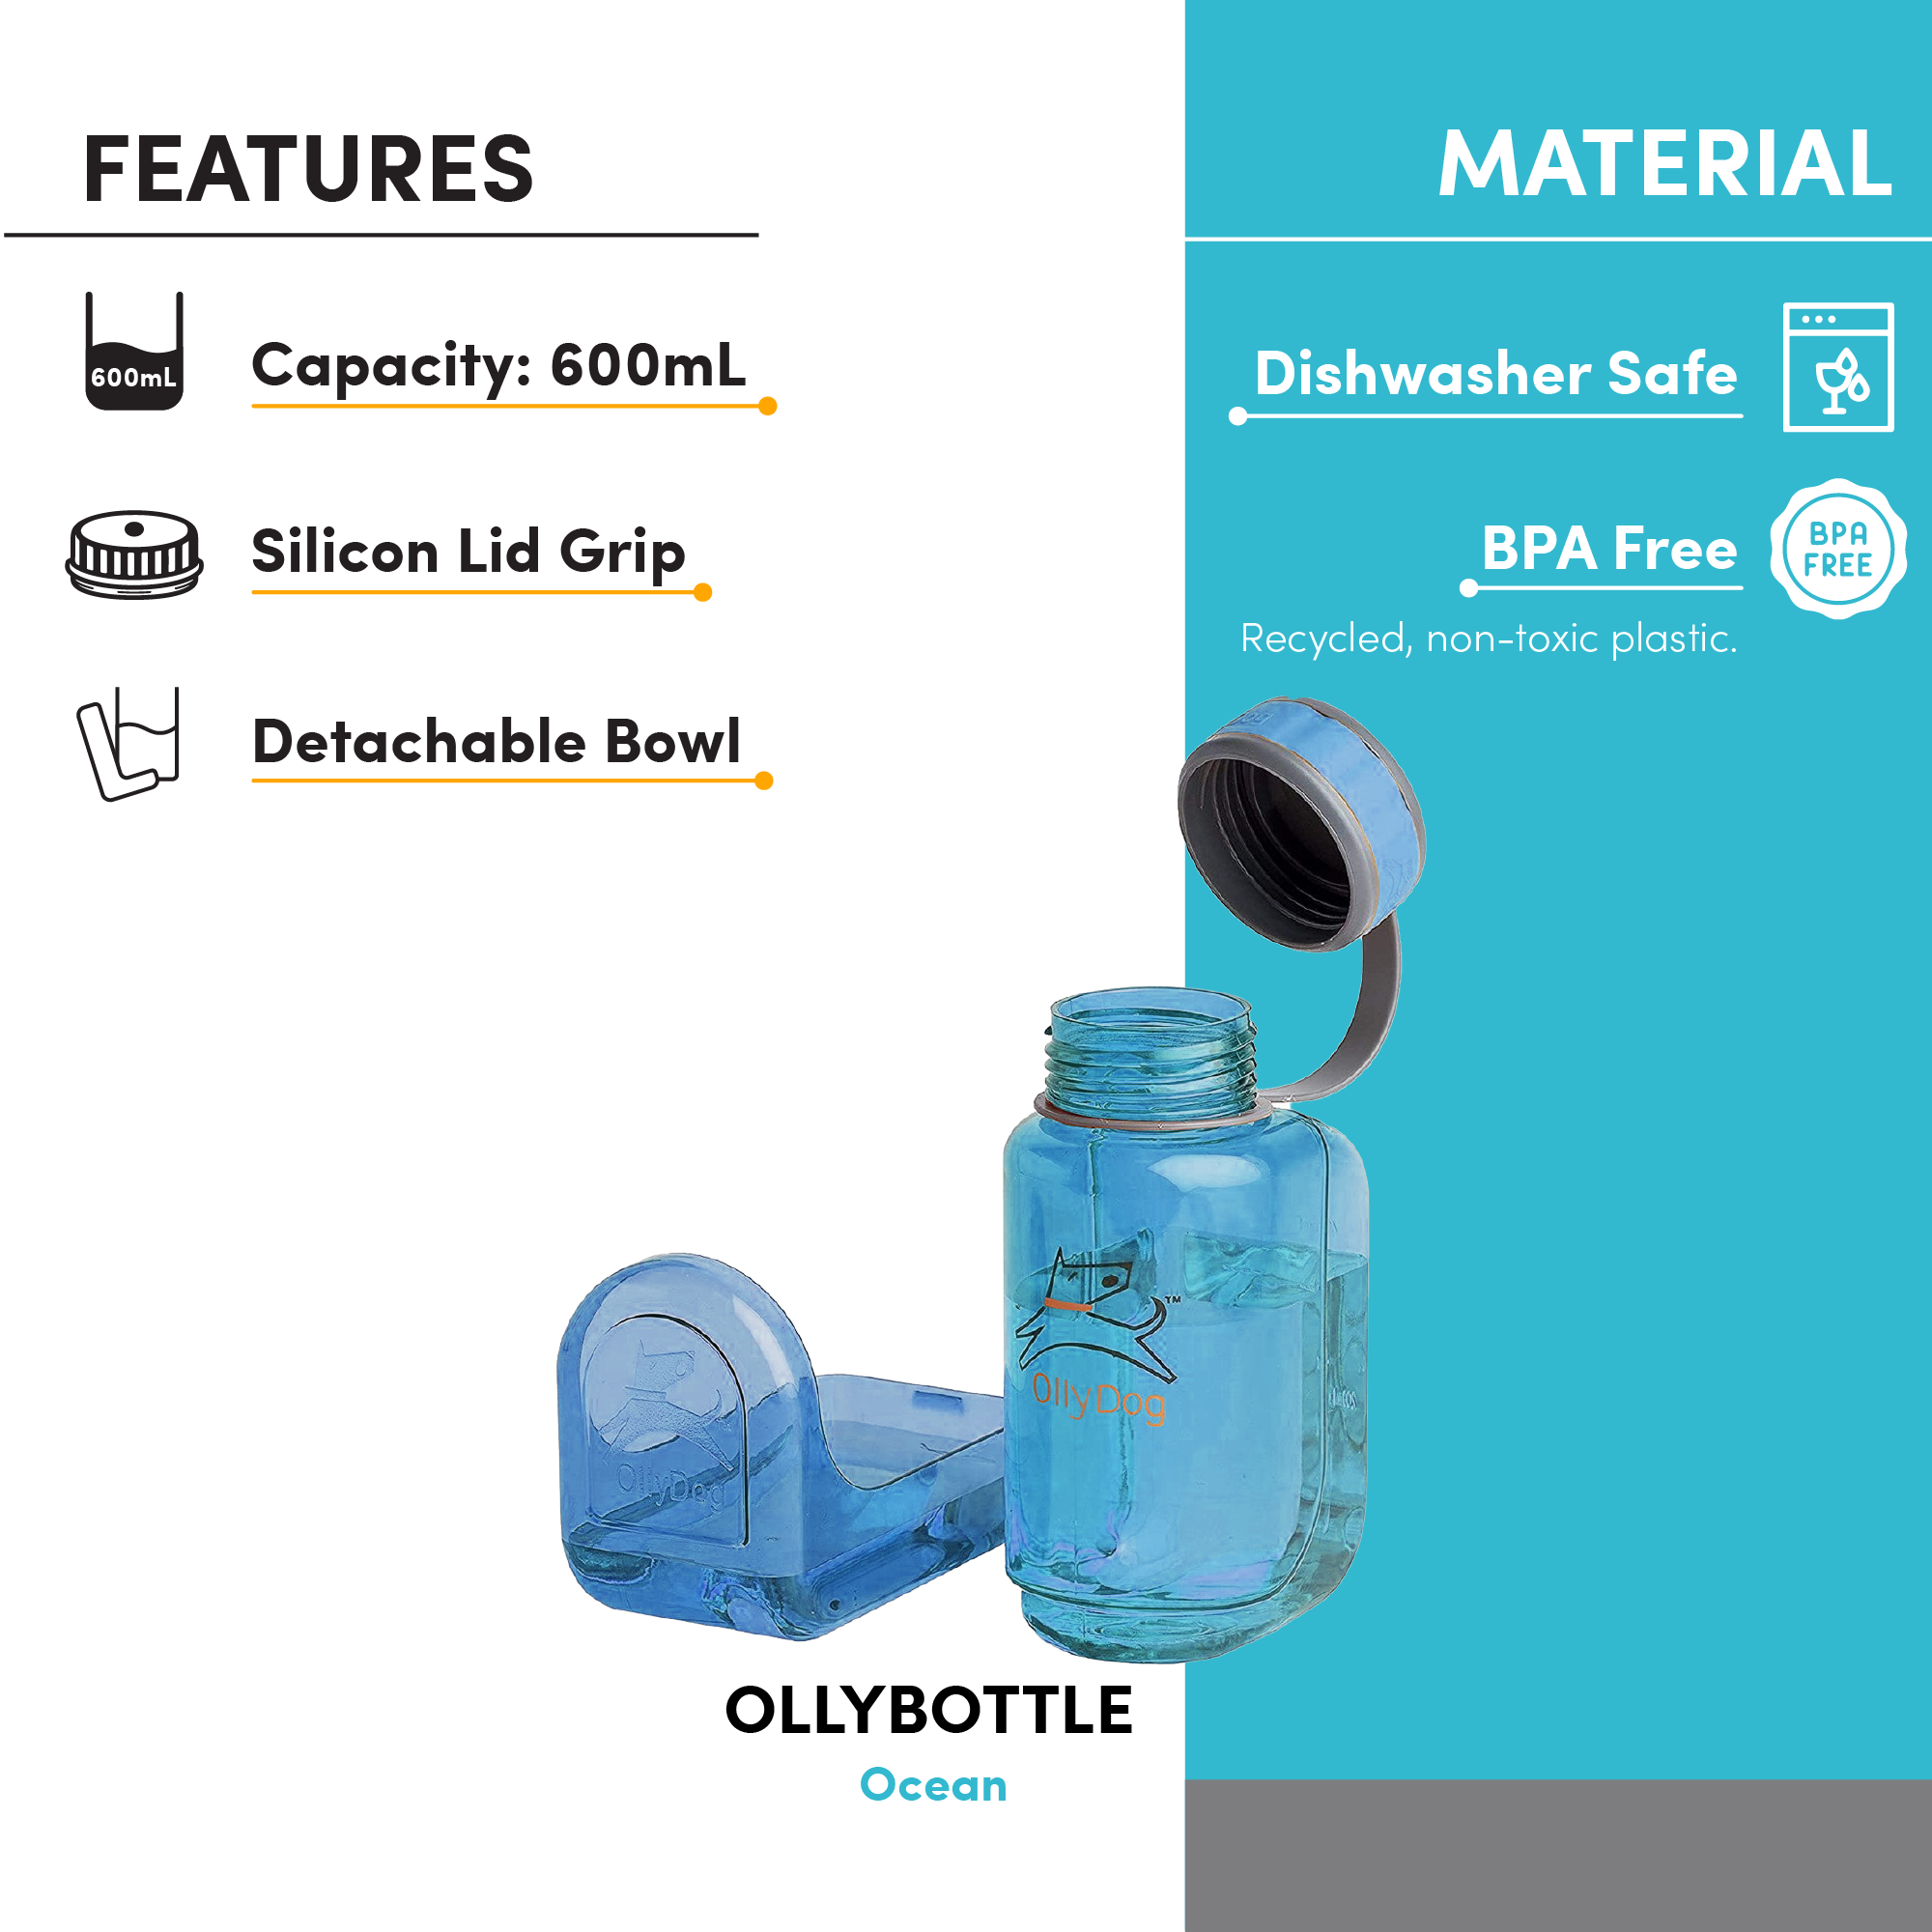 OllyBottle in Ocean | Water Sharing System